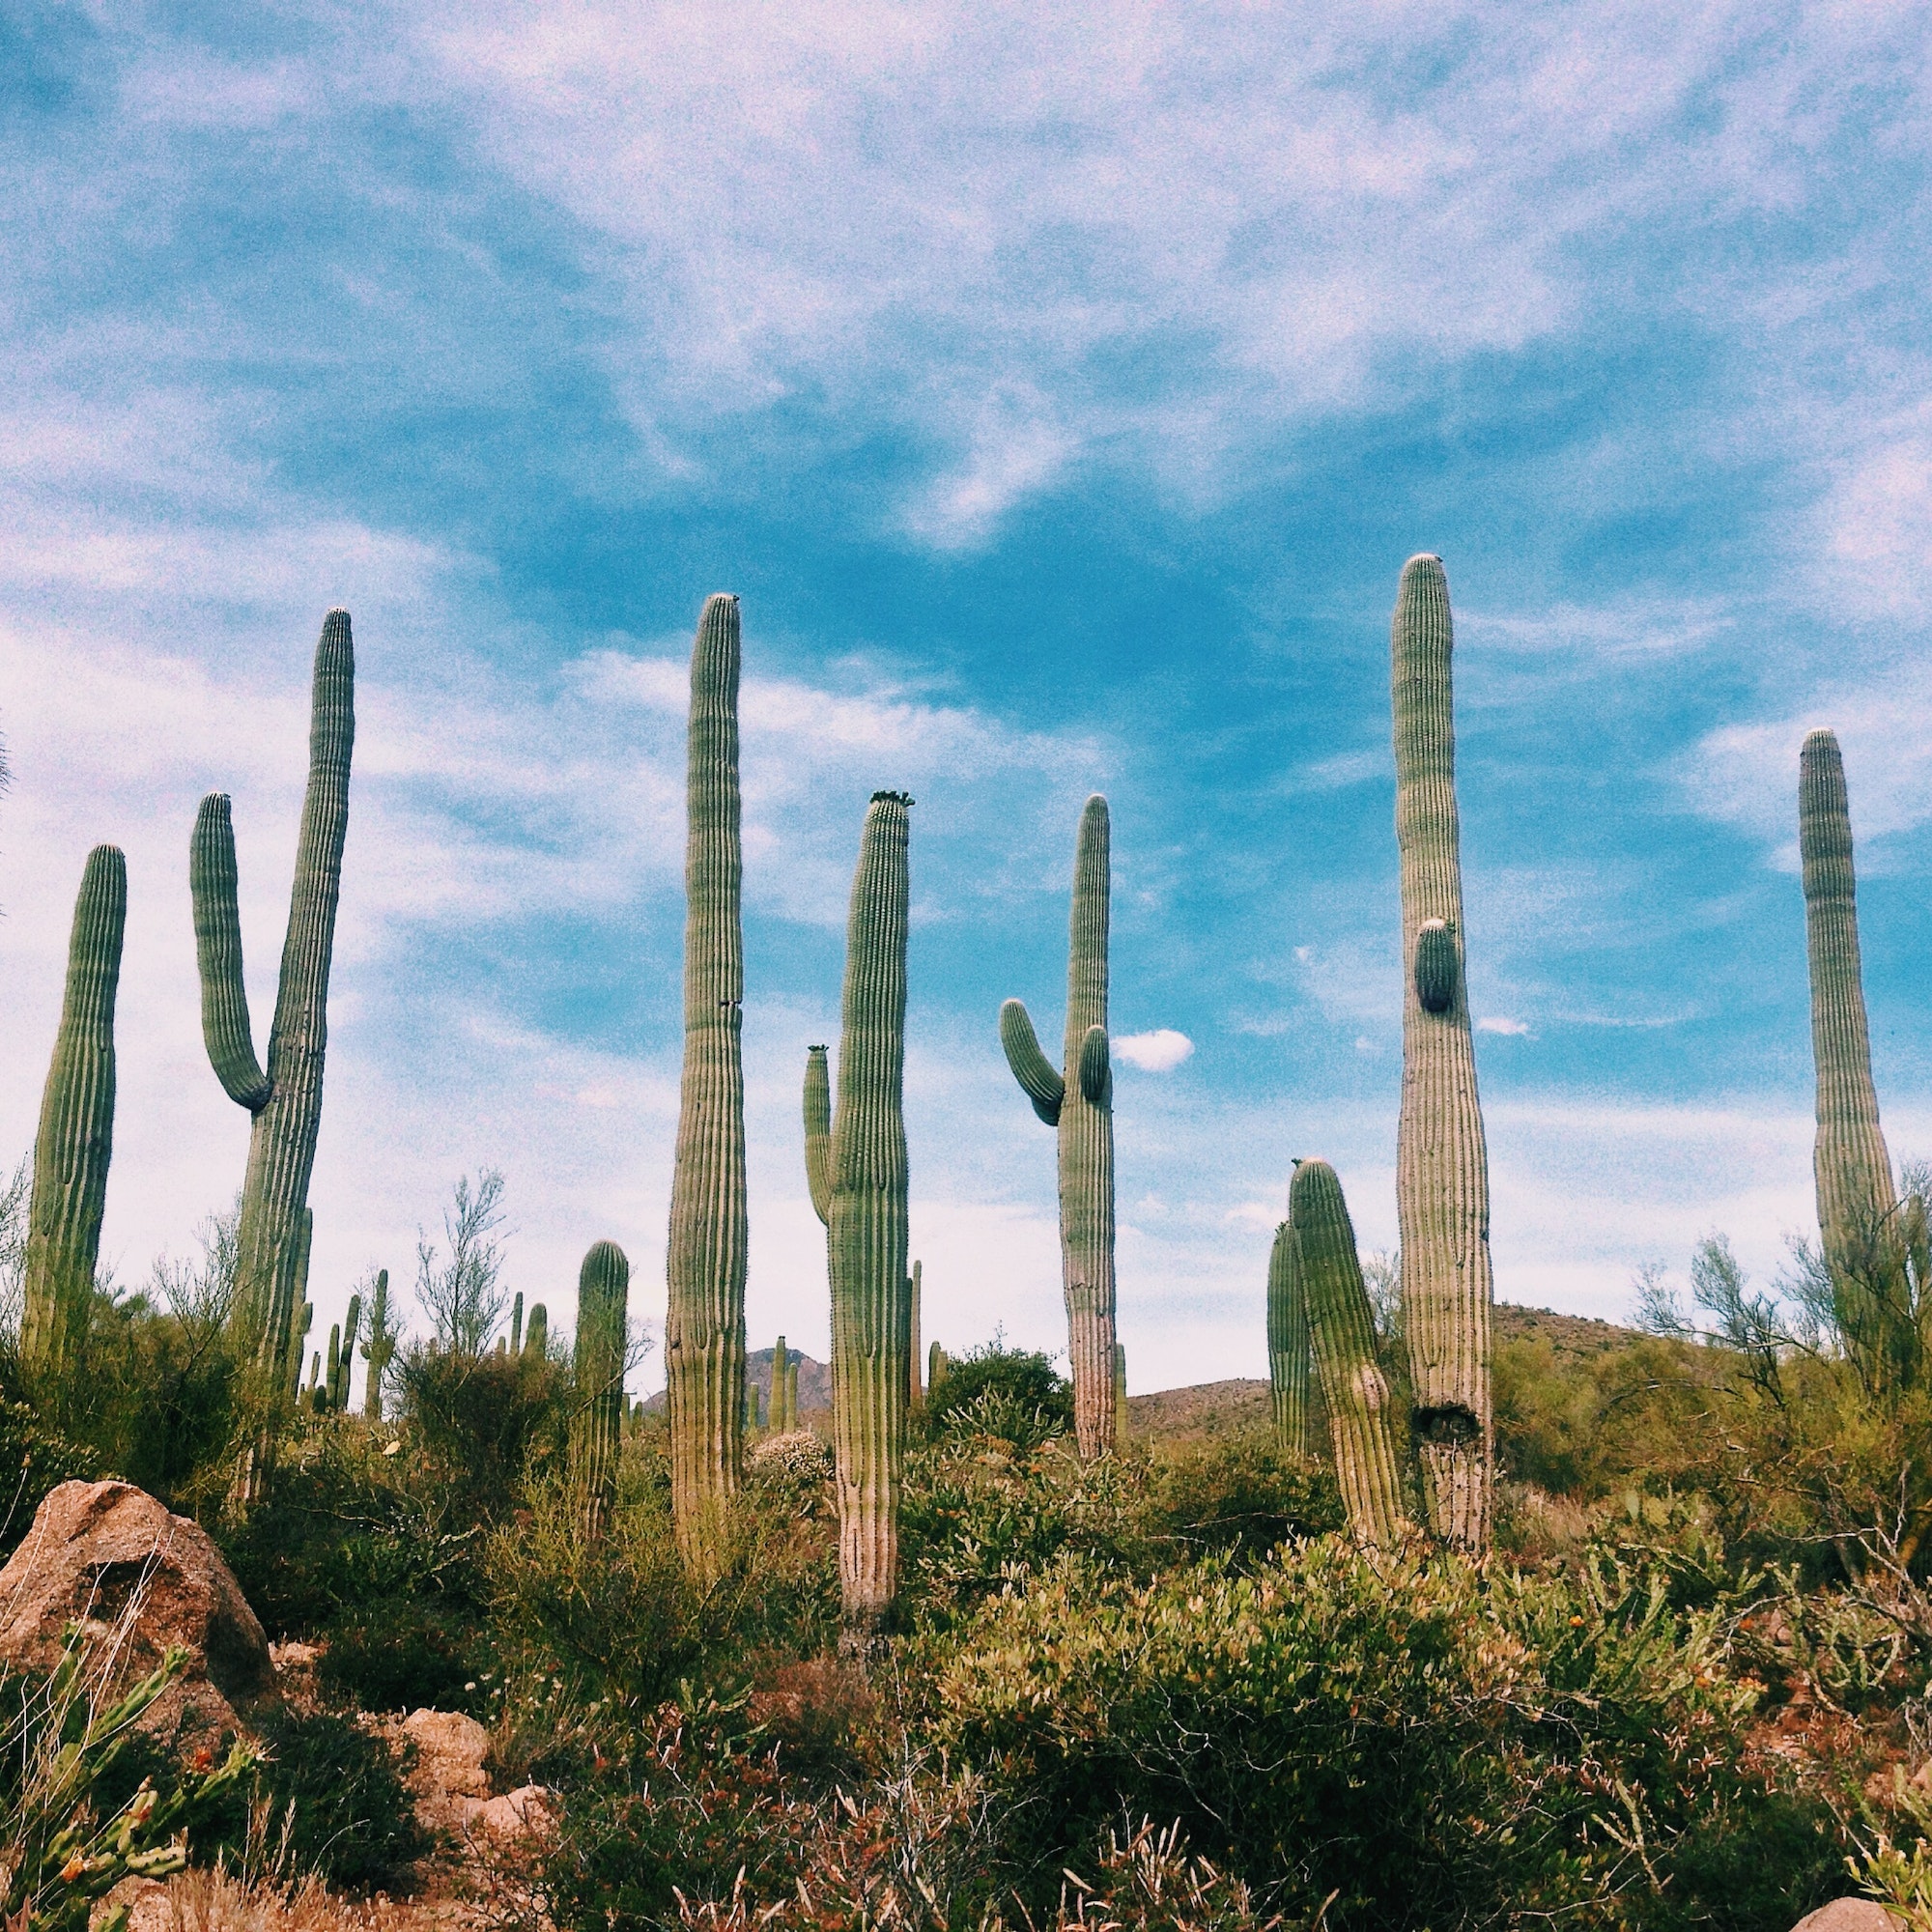 Saguaro Cactus in Arizona